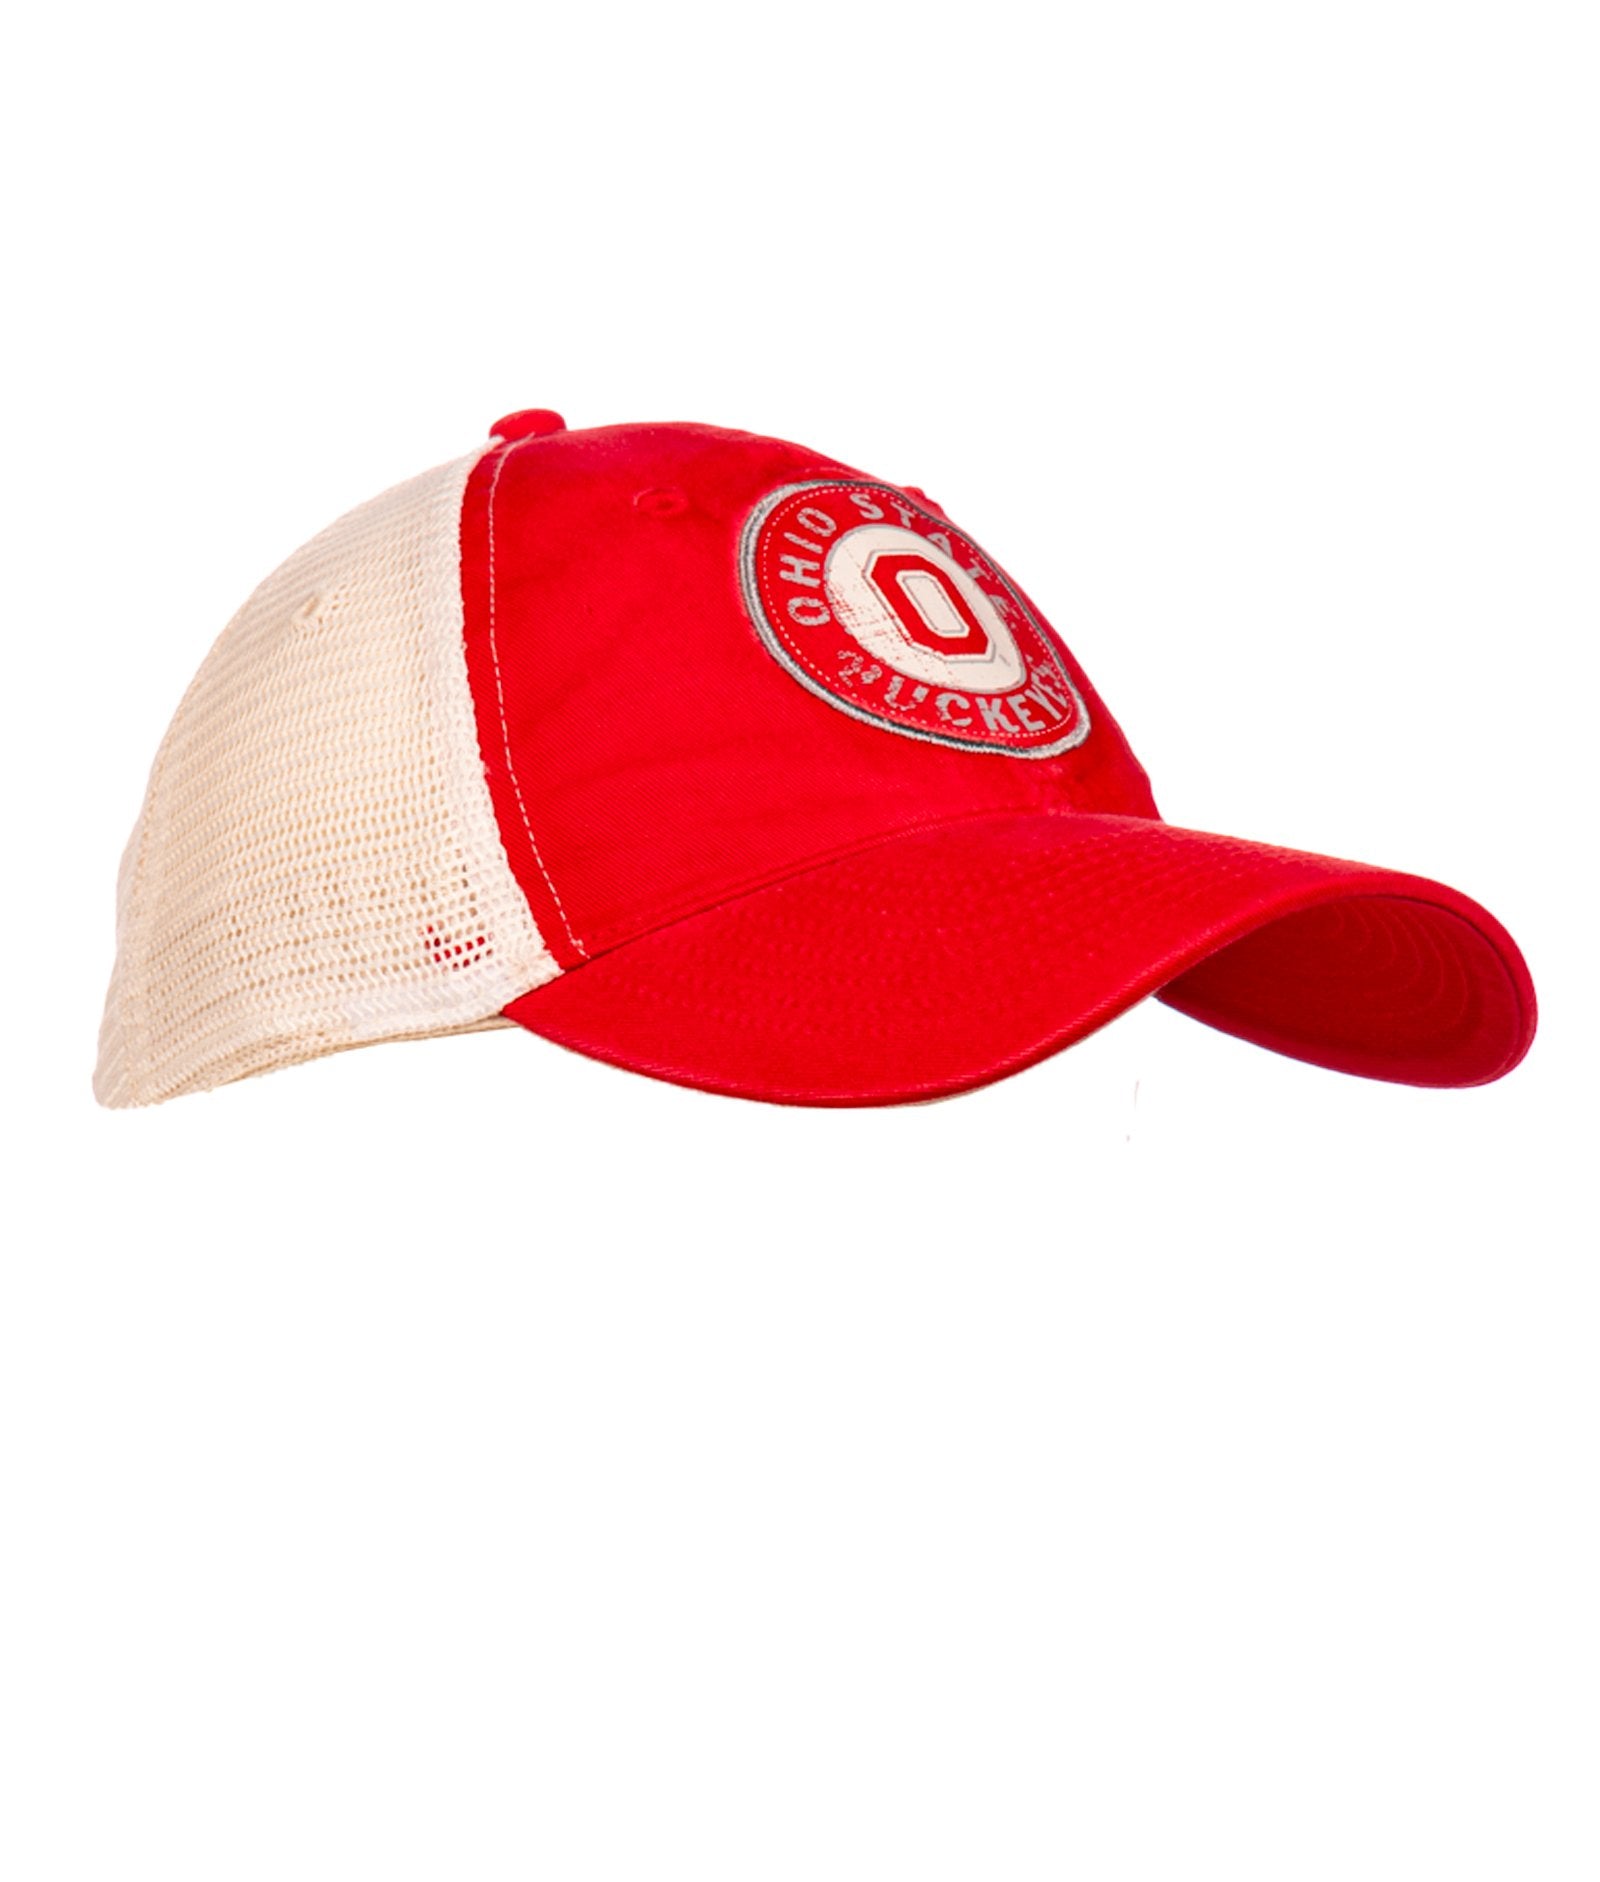 Ohio State Buckeyes Distressed Seal Trucker Adjustable Hat